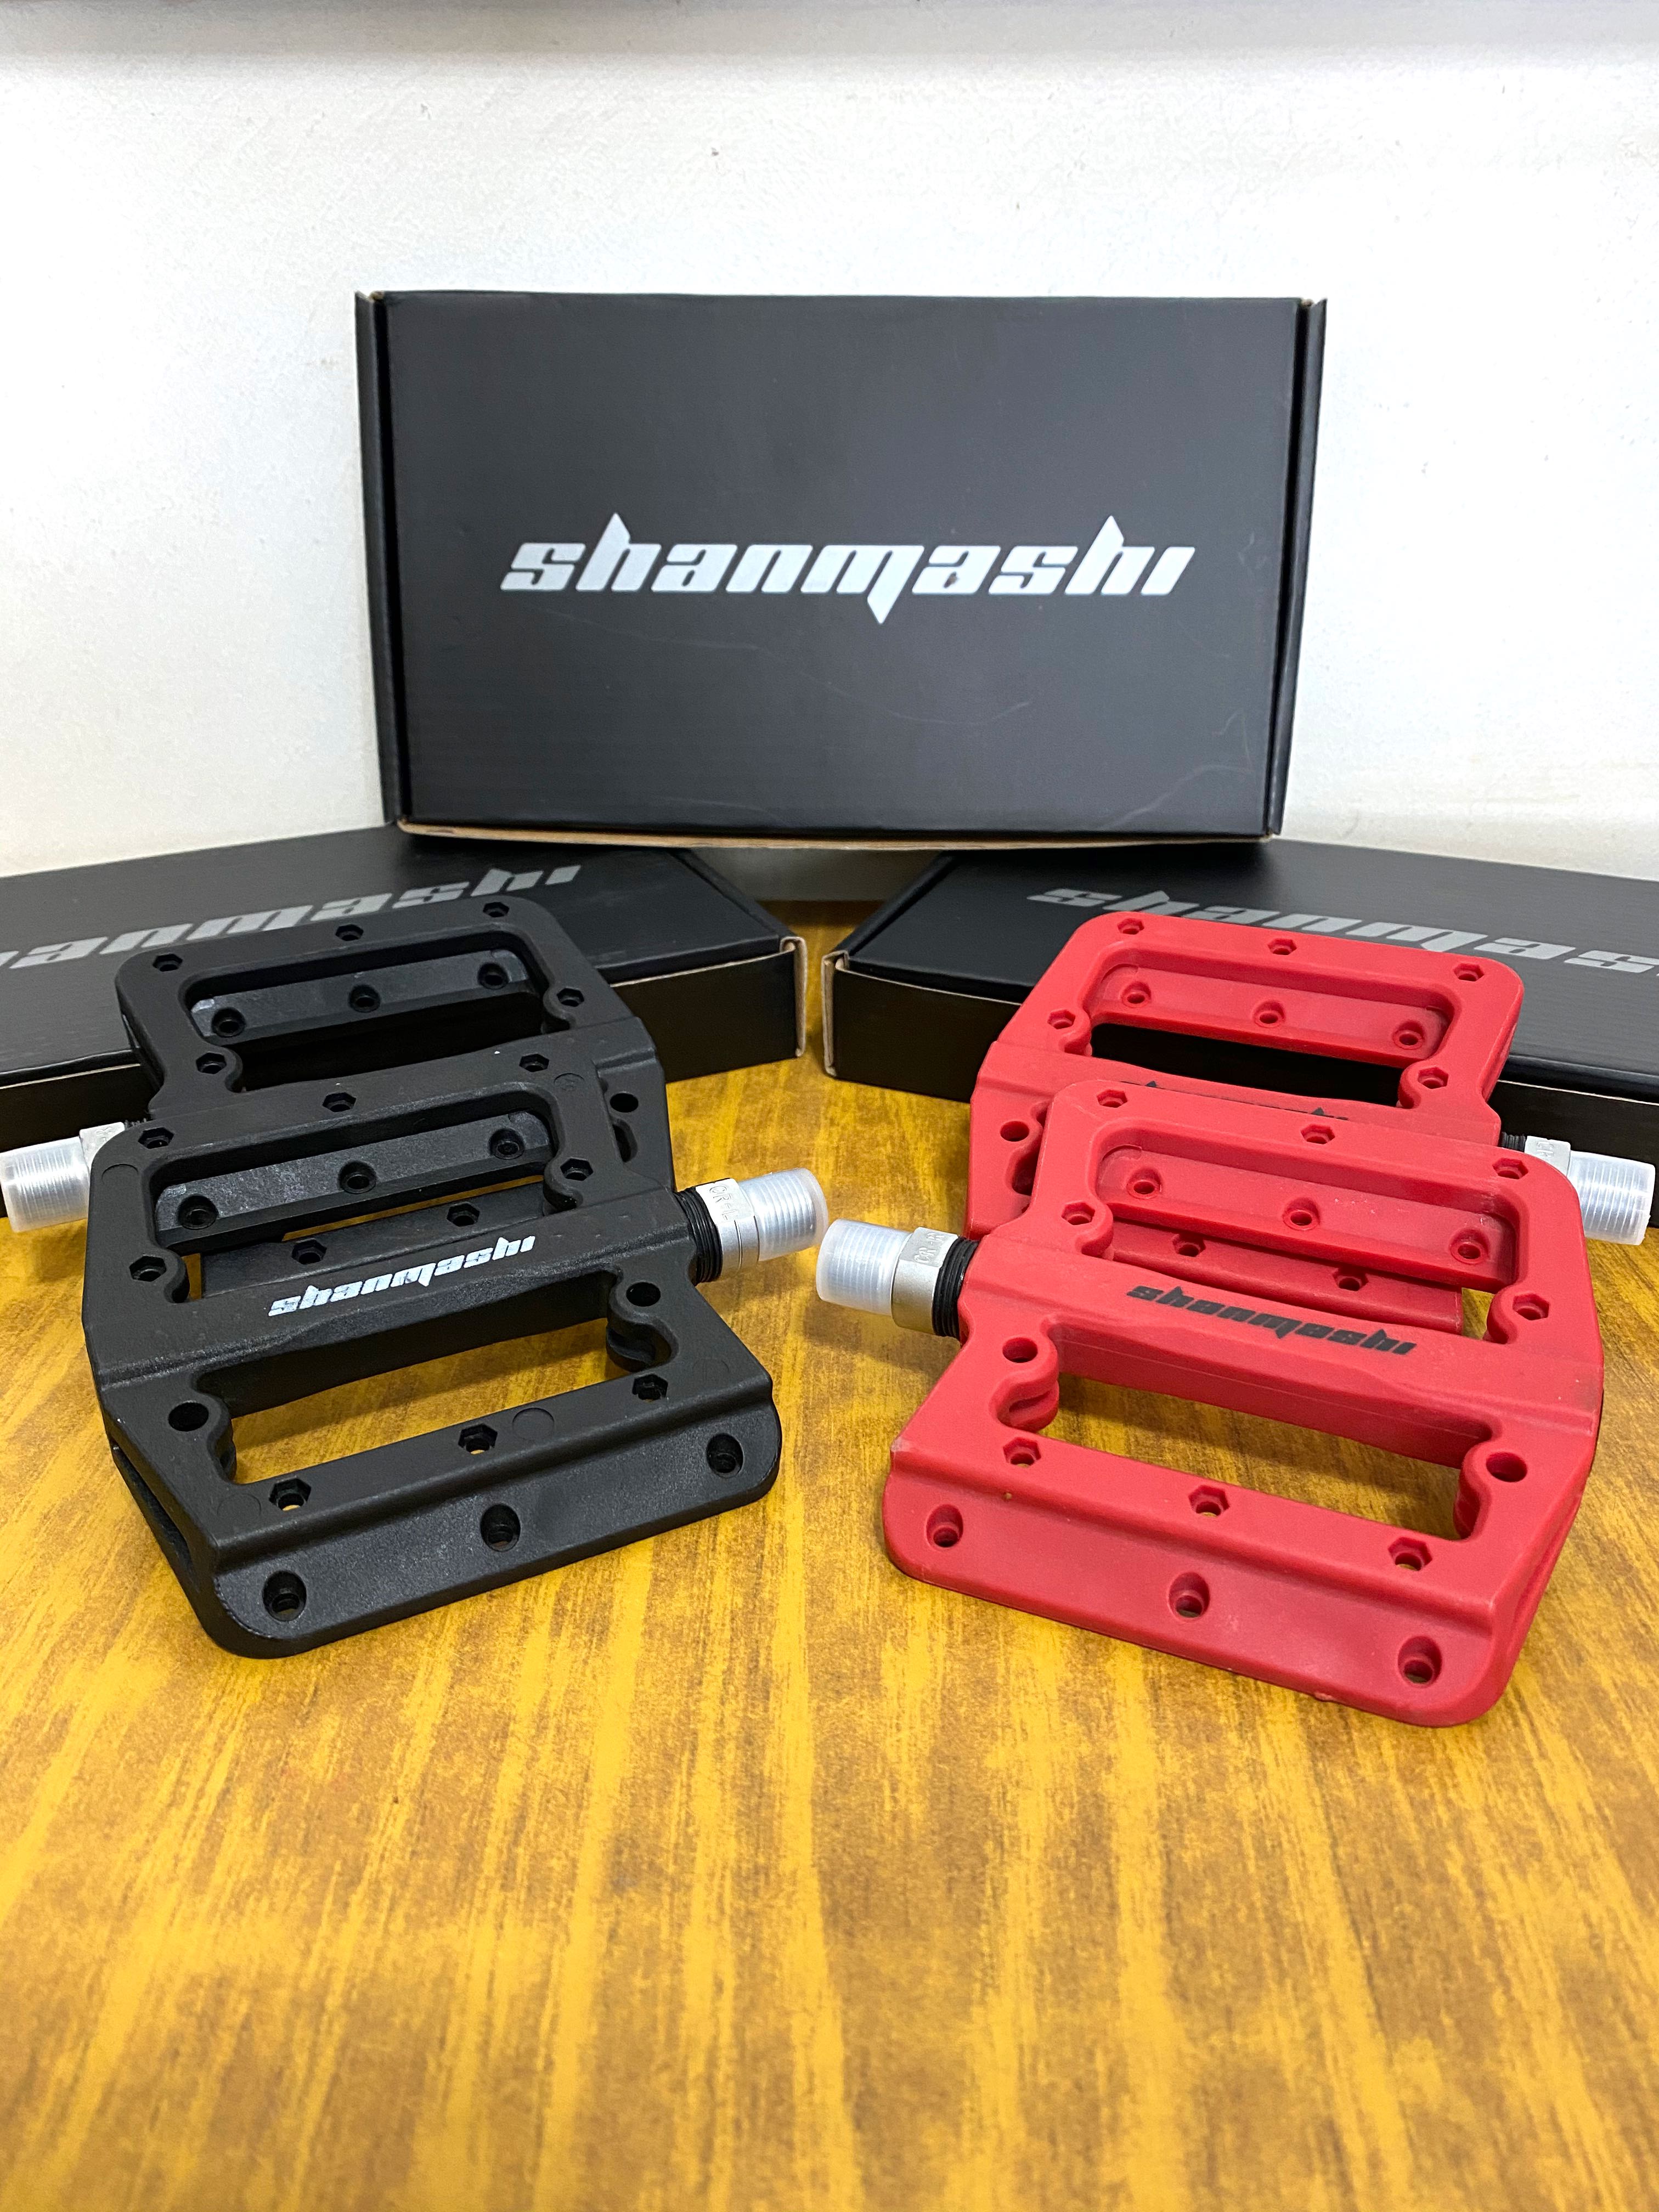 shanmashi pedals